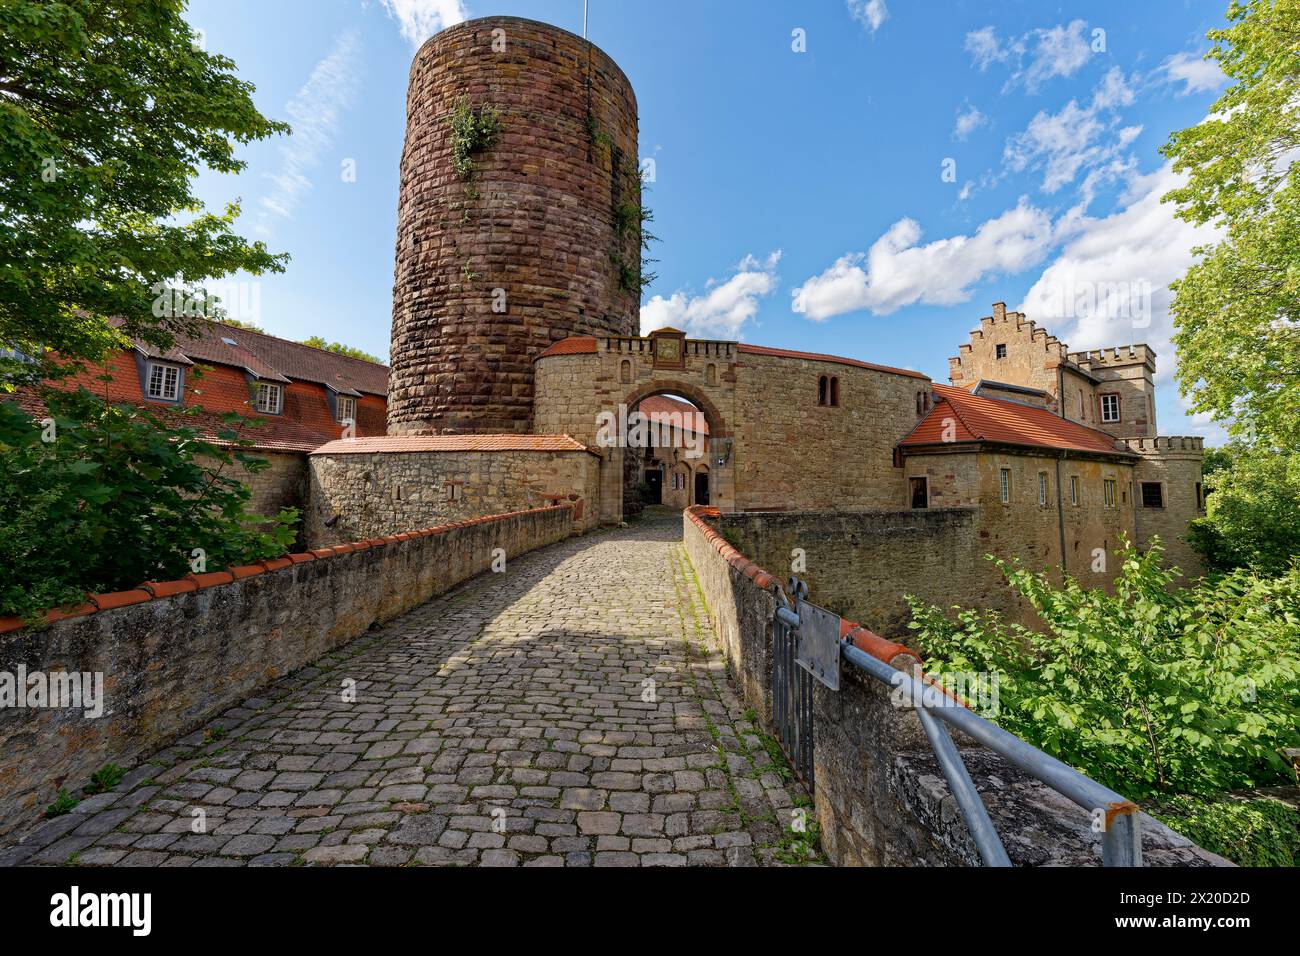 Saaleck Castle near the wine town of Hammelburg, Bad Kissingen district, Lower Franconia, Franconia, Bavaria, Germany Stock Photo